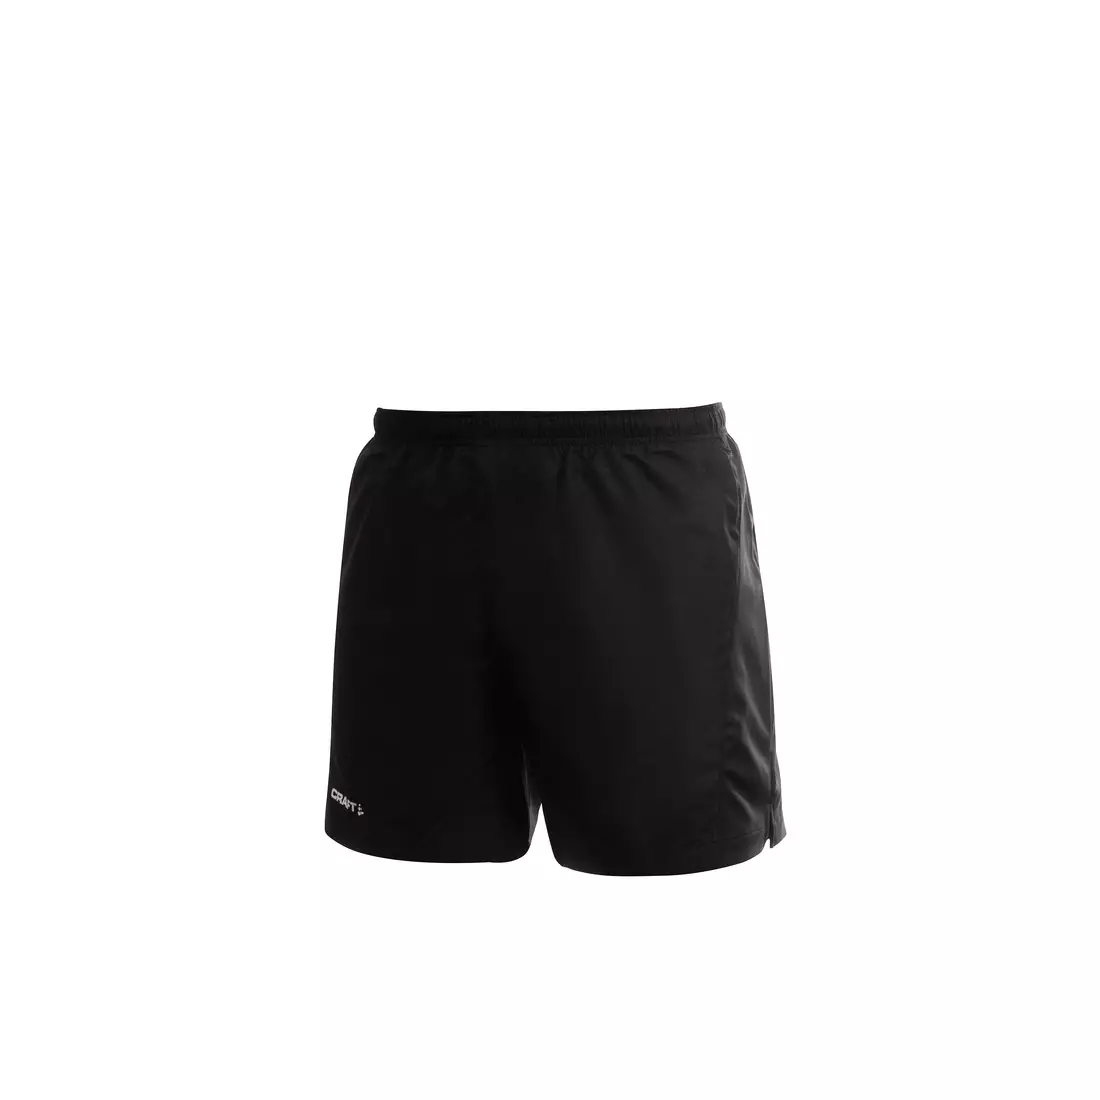 CRAFT ACTIVE RUN 194145-1999 - men's running shorts